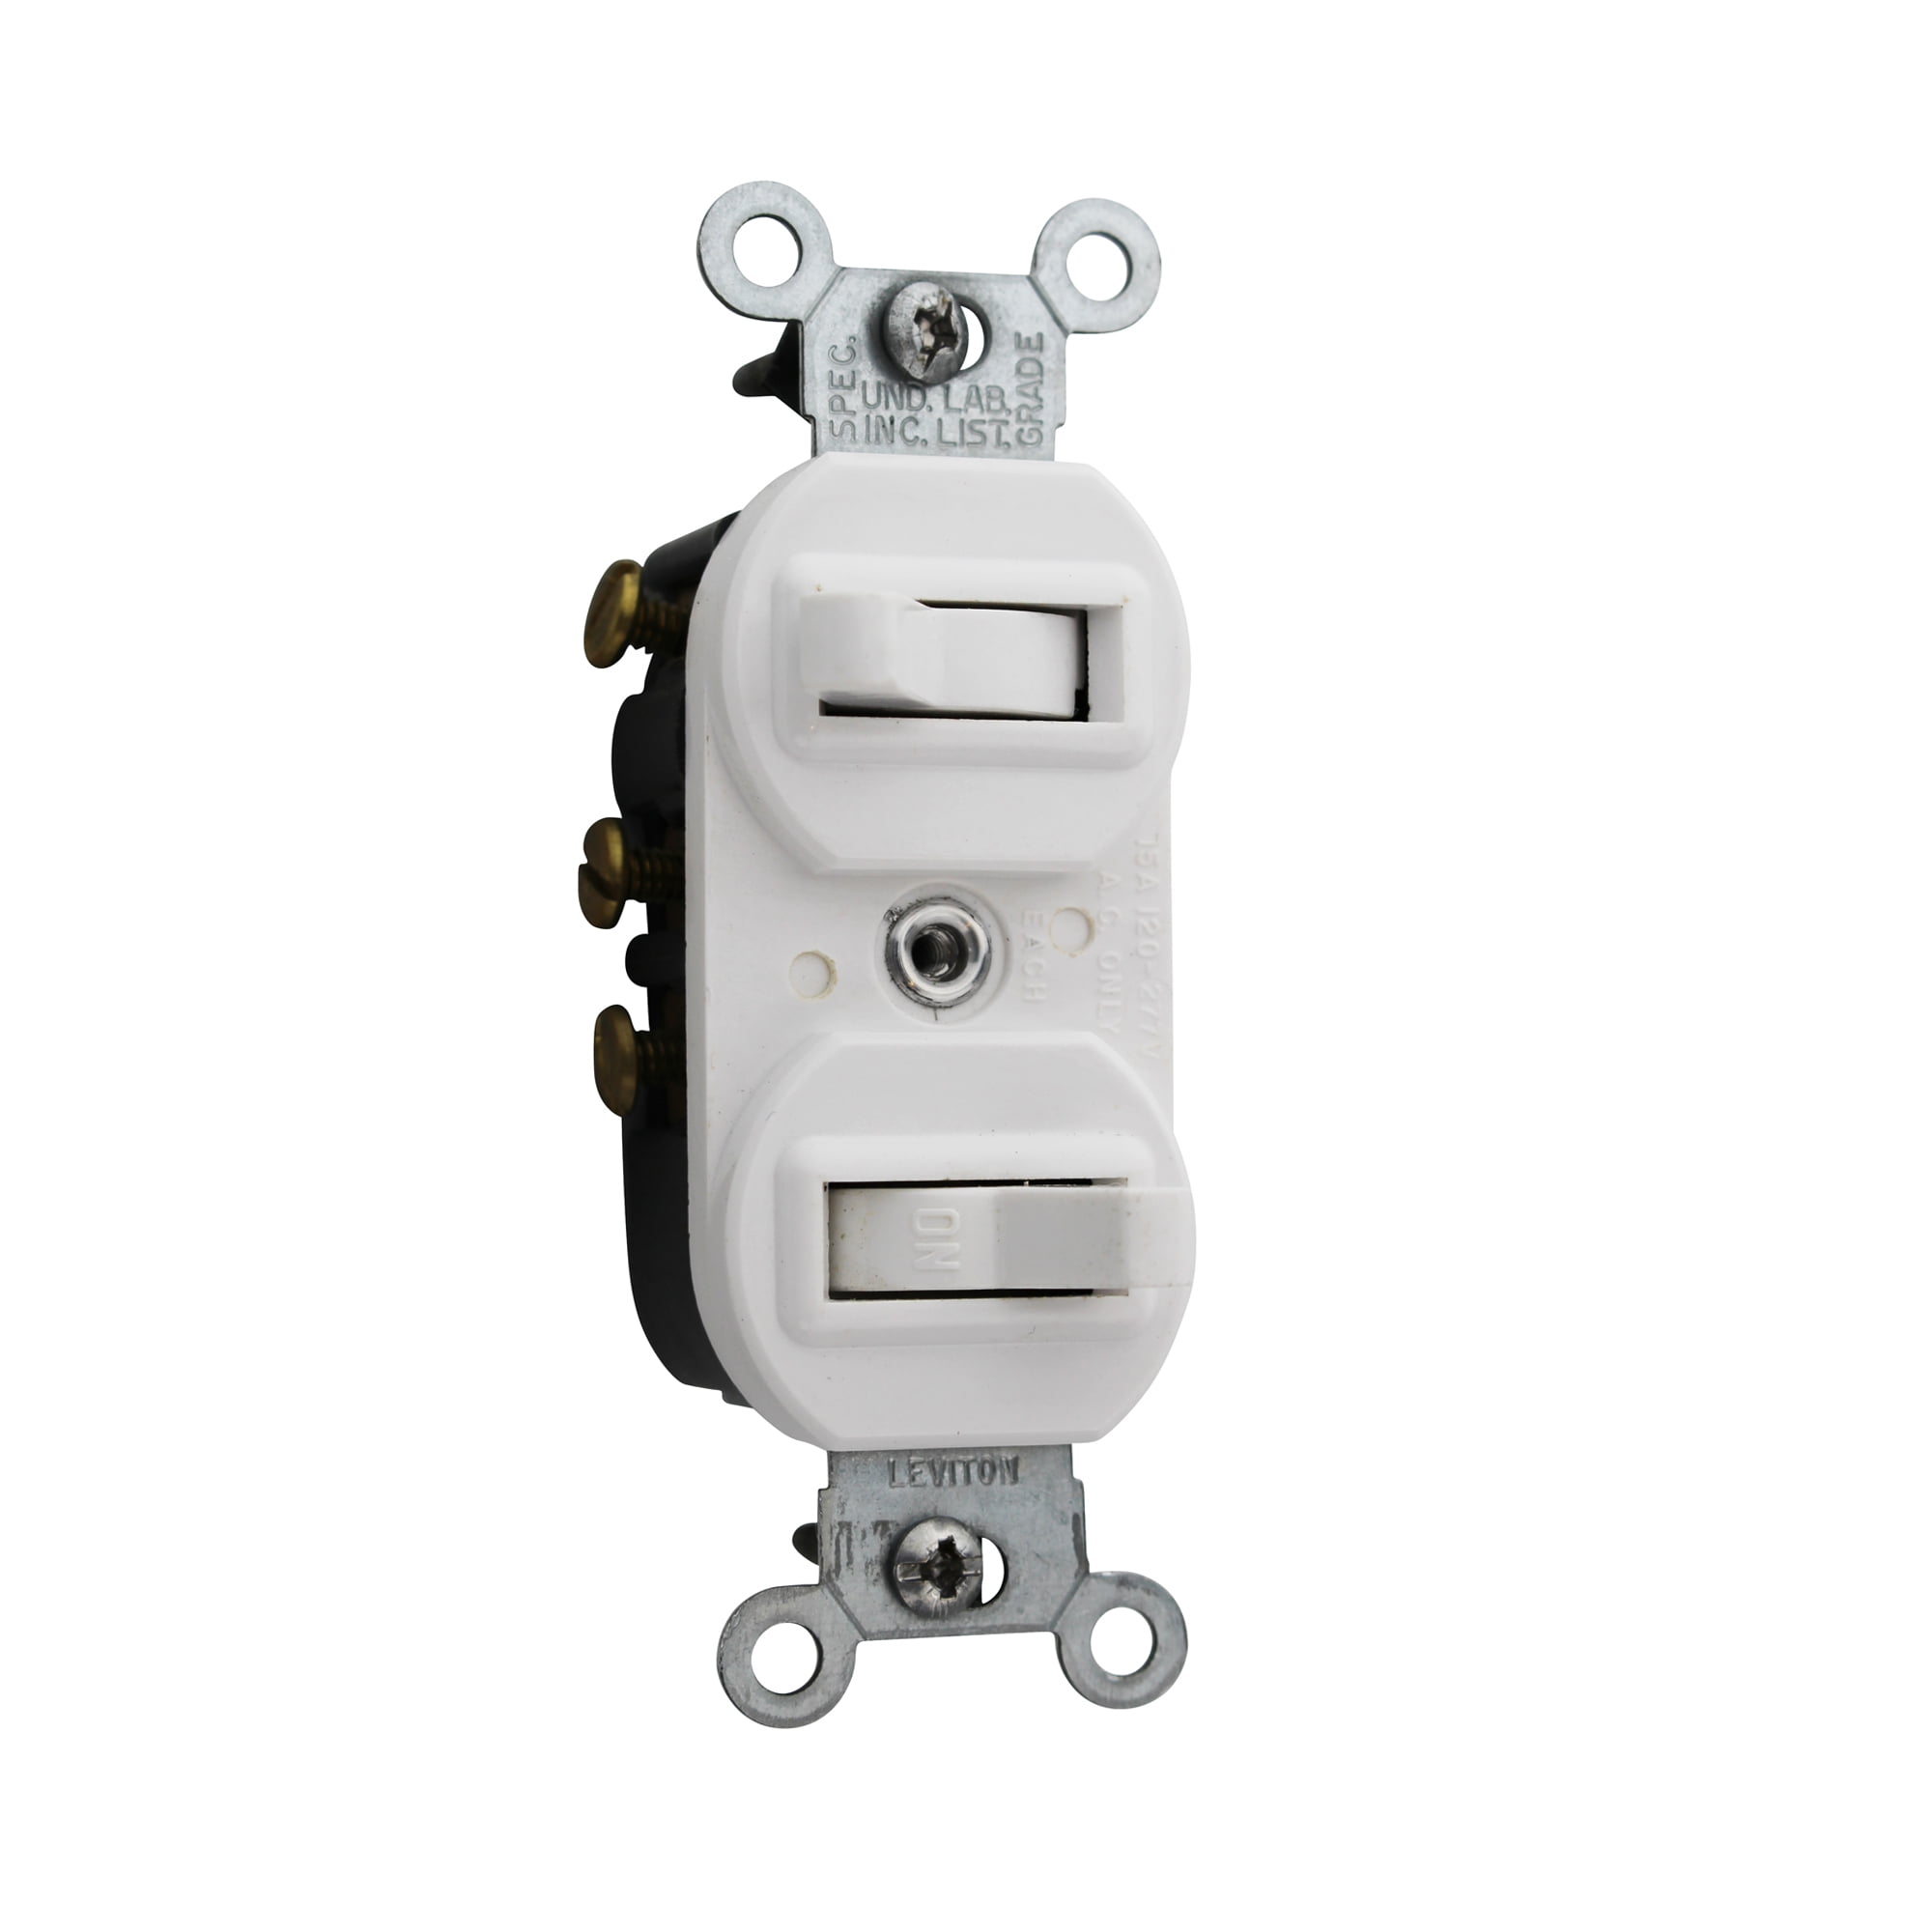 Single Pole Duplex Switch,No R62-5634-WS Leviton Mfg Co 